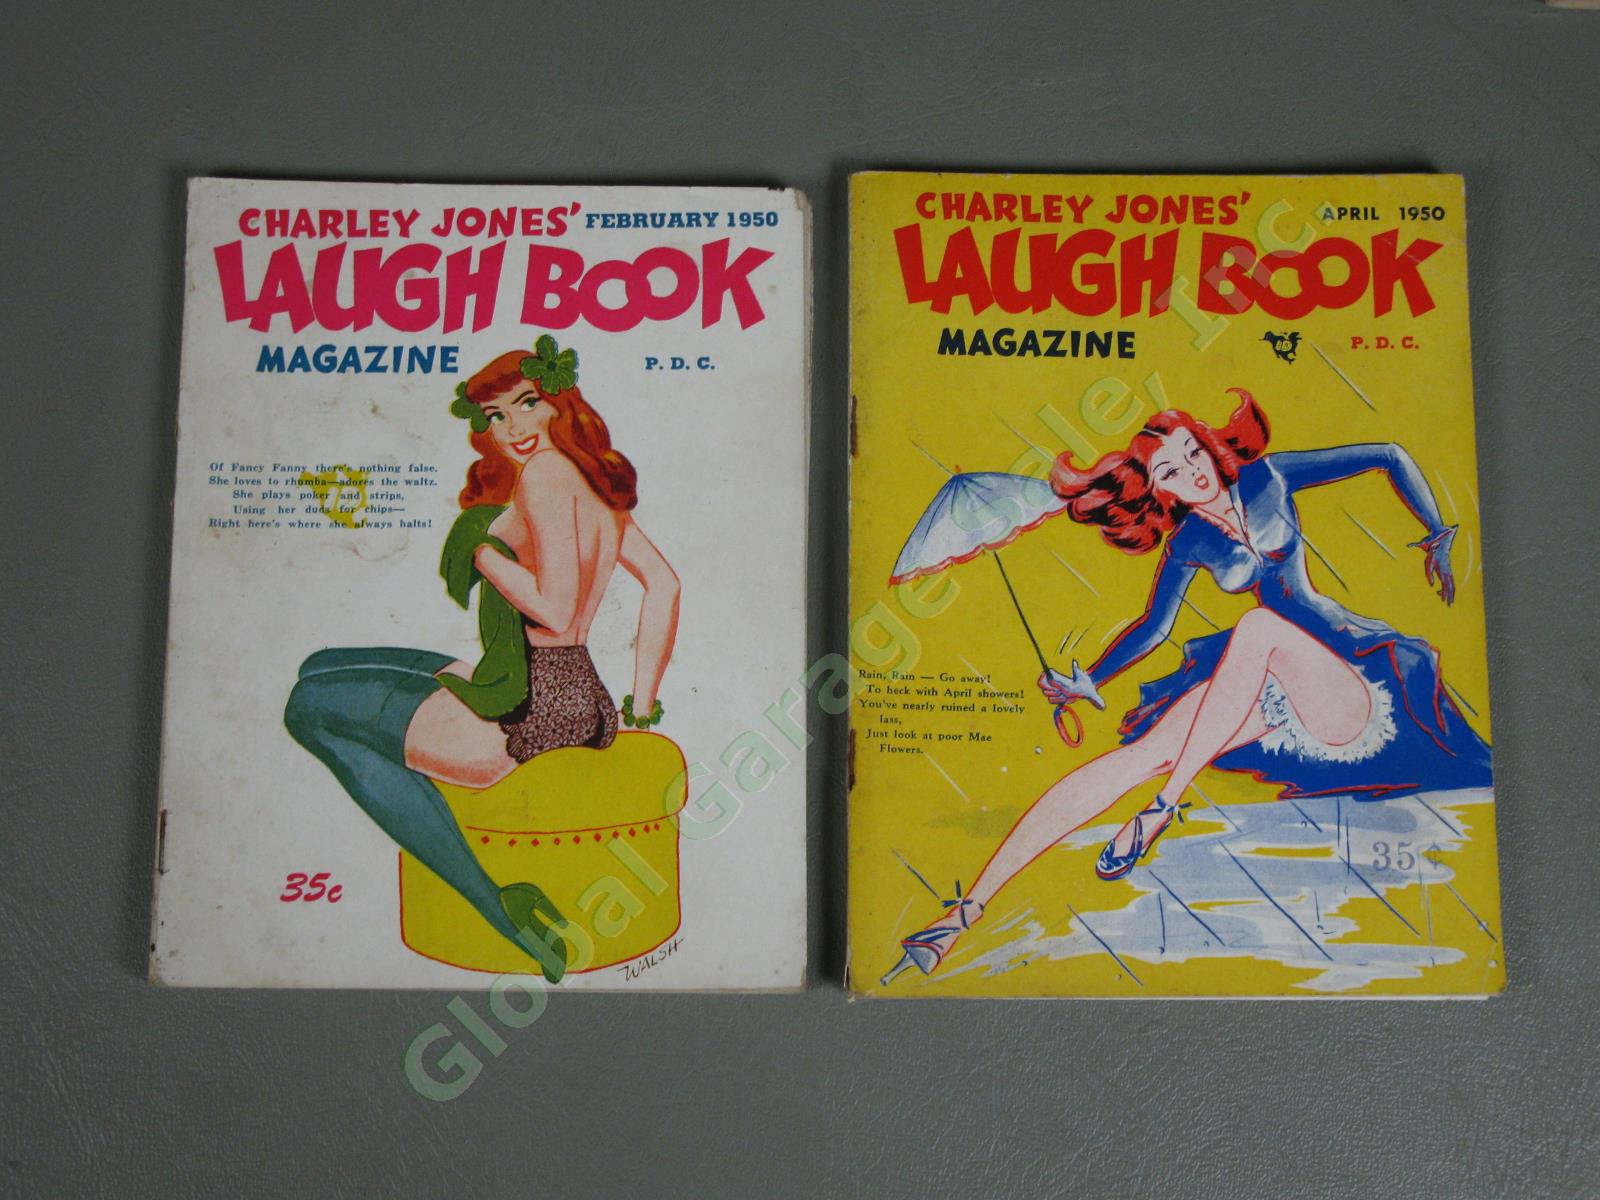 22 Vintage 1947-1950 Charley Jones Laugh Book Magazines Lot Risque Adult Humor 7